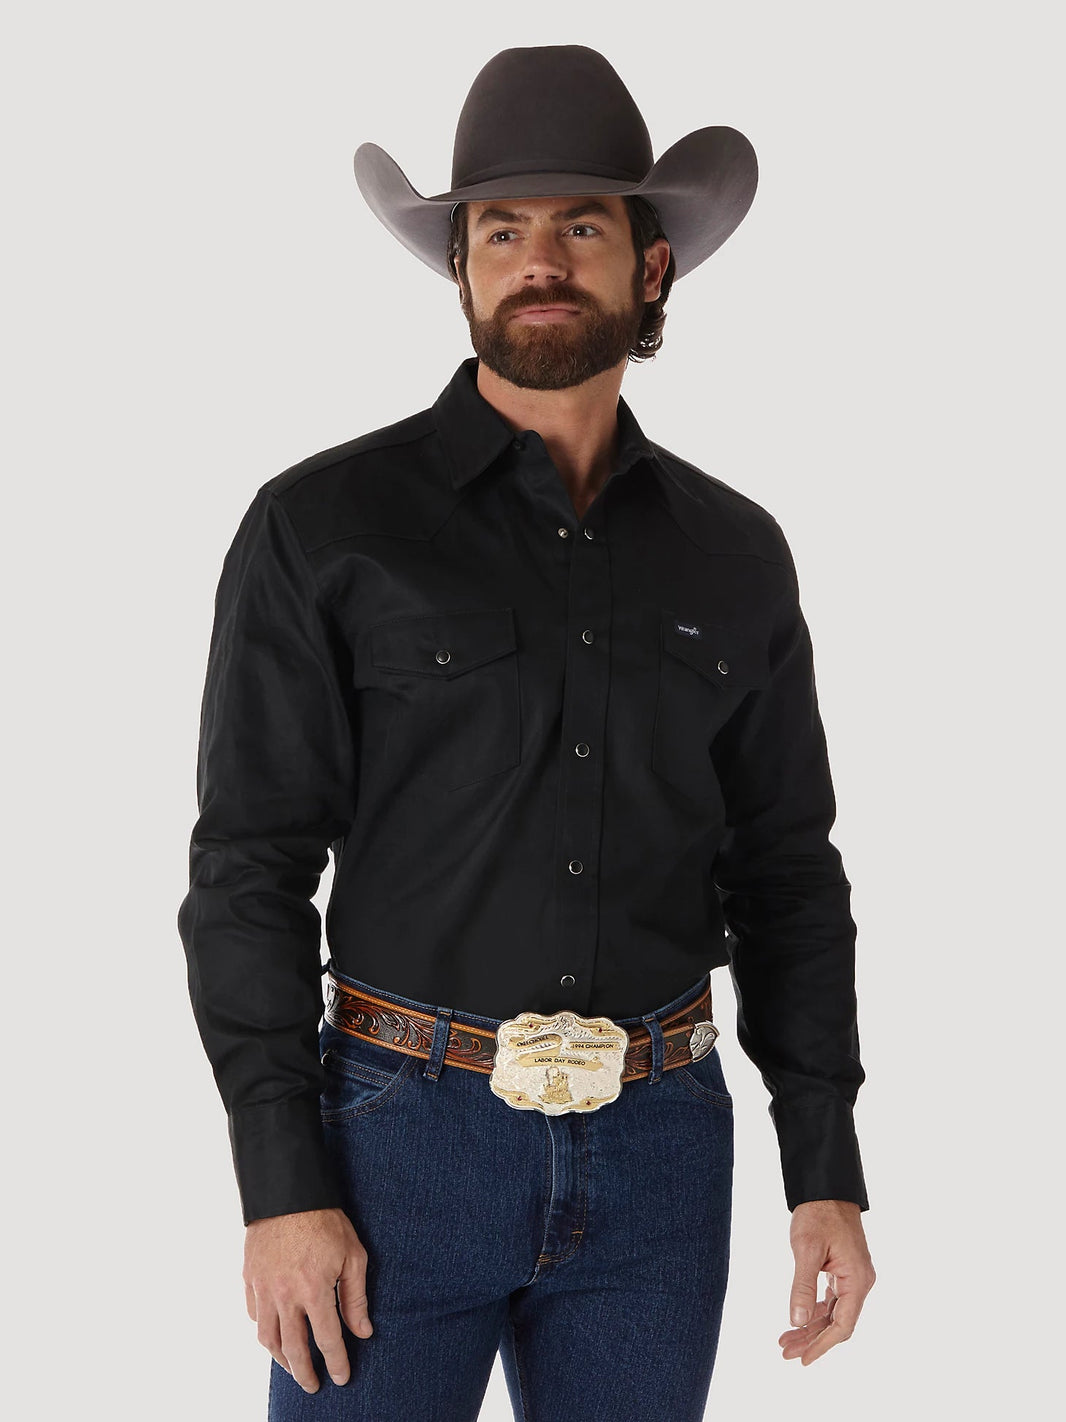 Men's Western Shirts – Solano's Boot & Western Wear